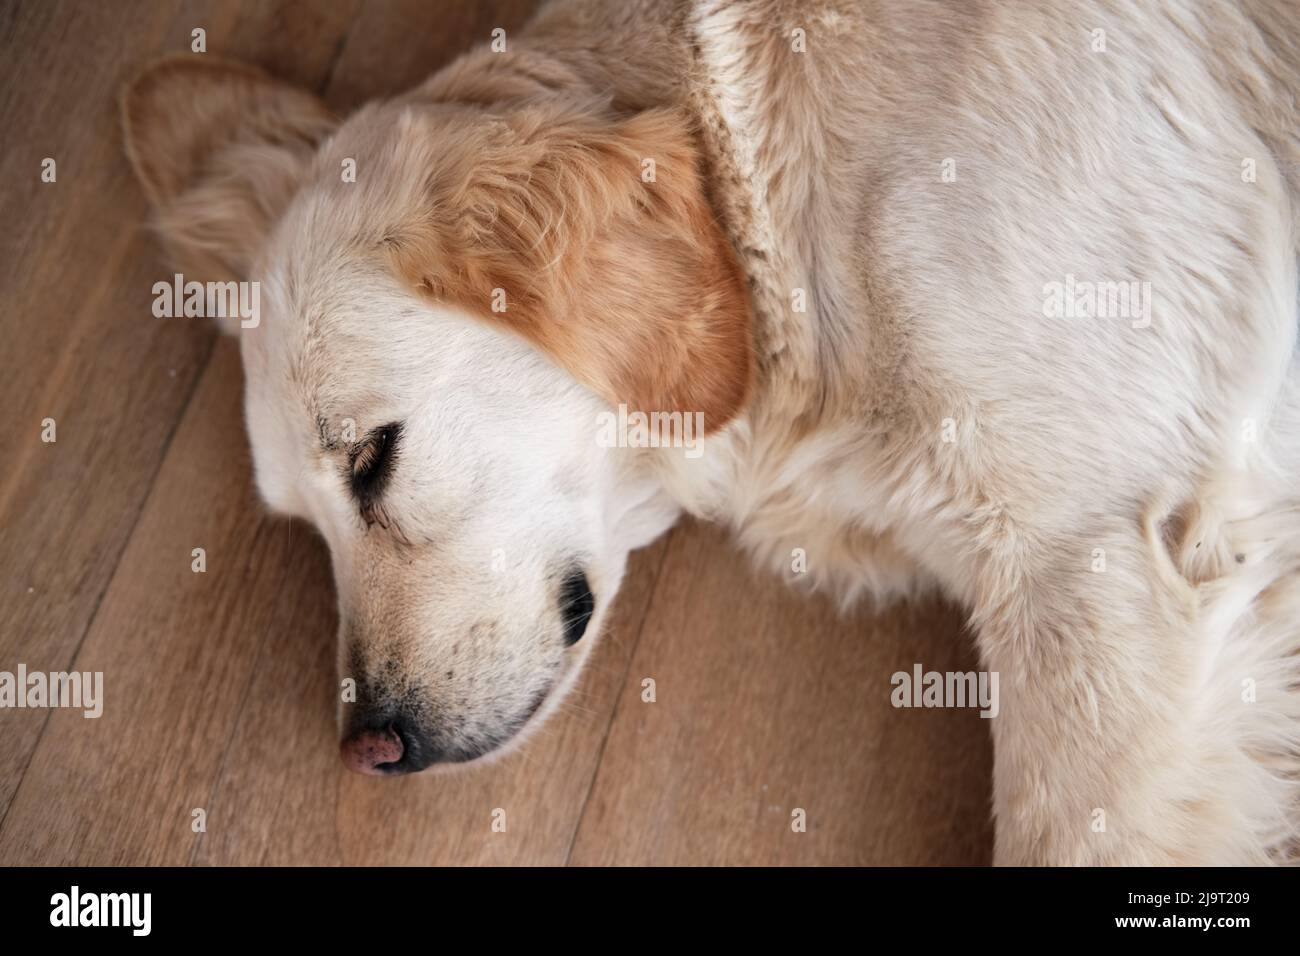 Cute golden retriever sleeping on the floor. Stock Photo